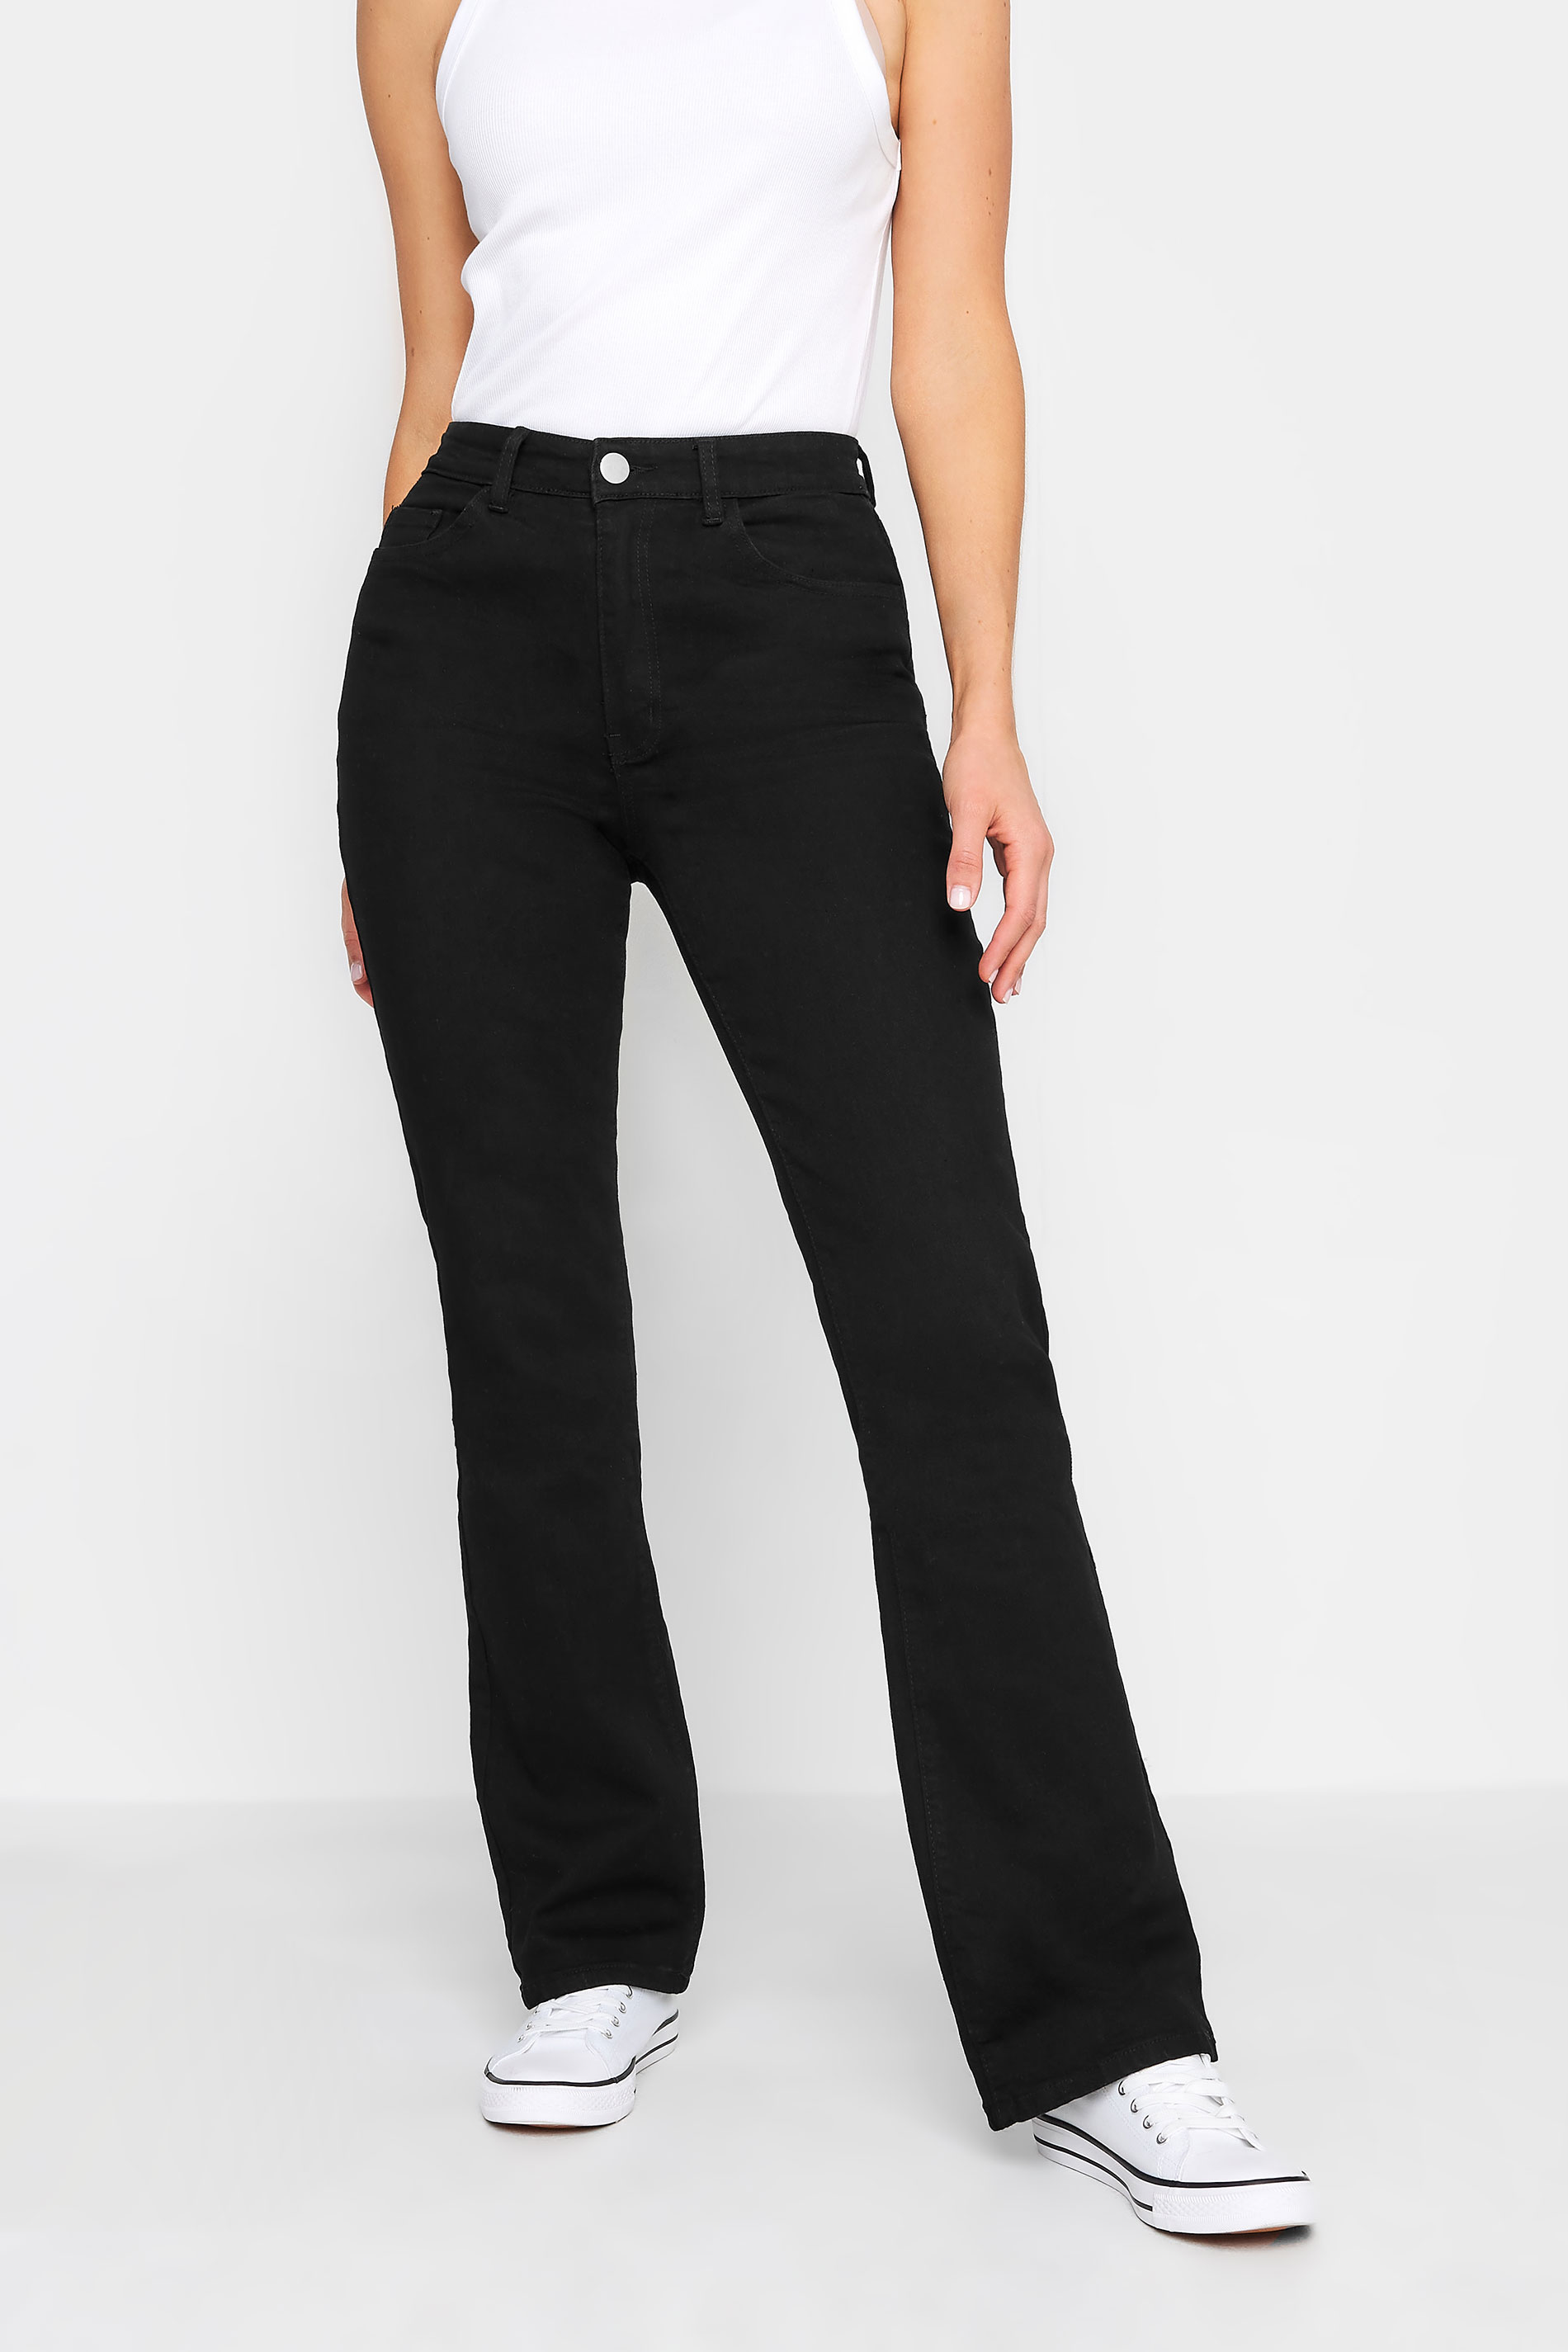 LTS Tall Women's Black Bootcut Denim Jeans | Long Tall Sally 2